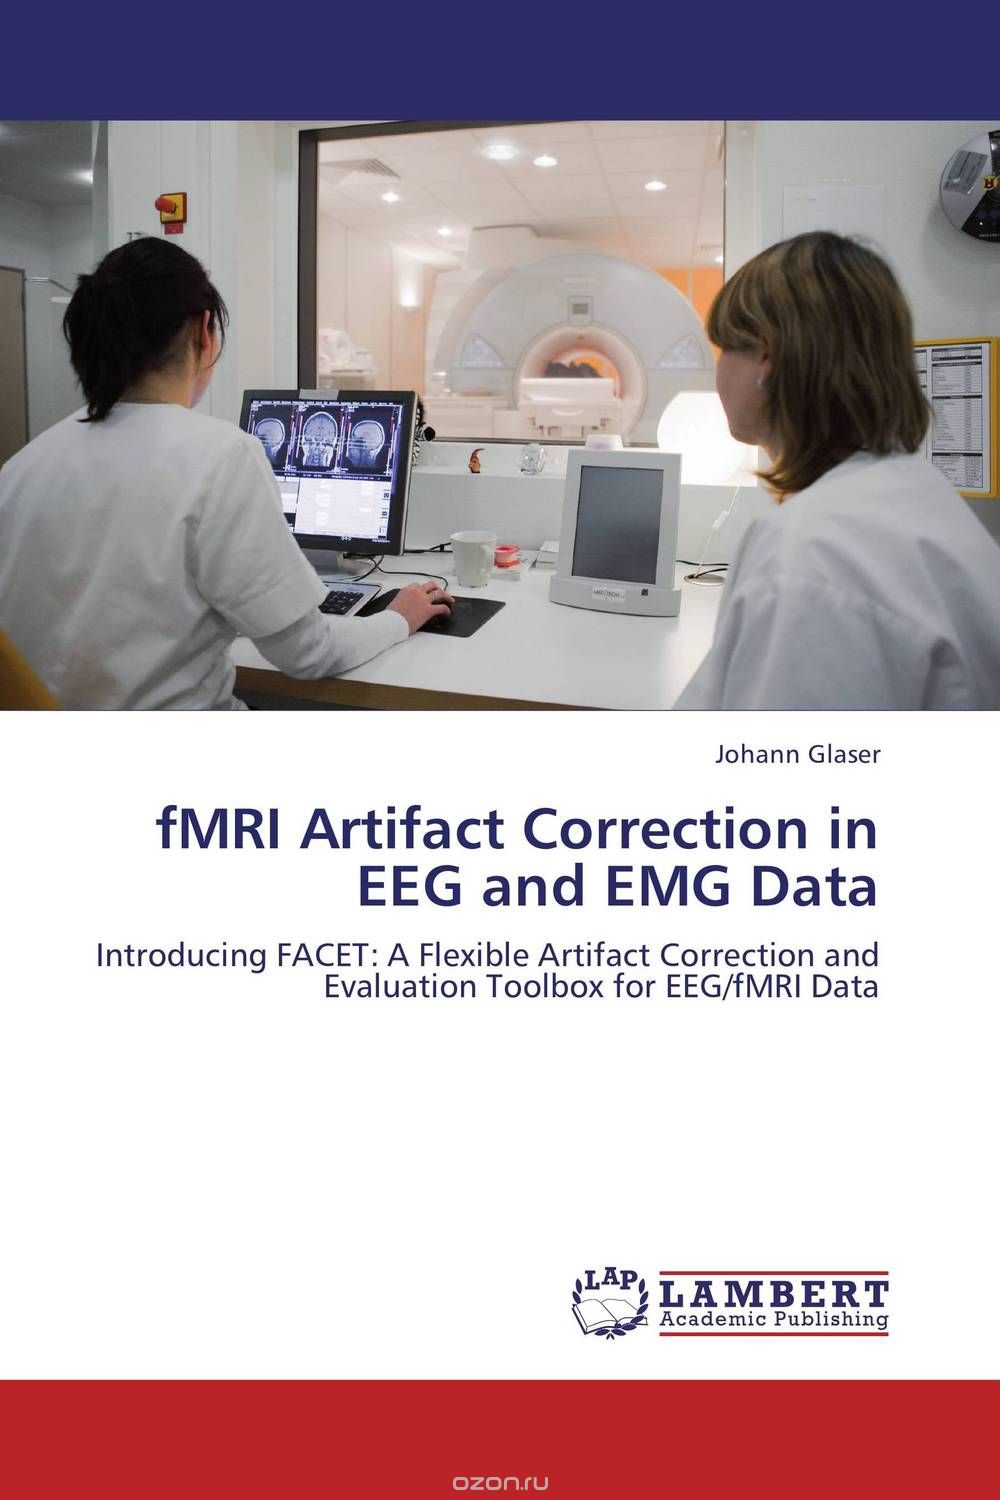 Скачать книгу "fMRI Artifact Correction in EEG and EMG Data"